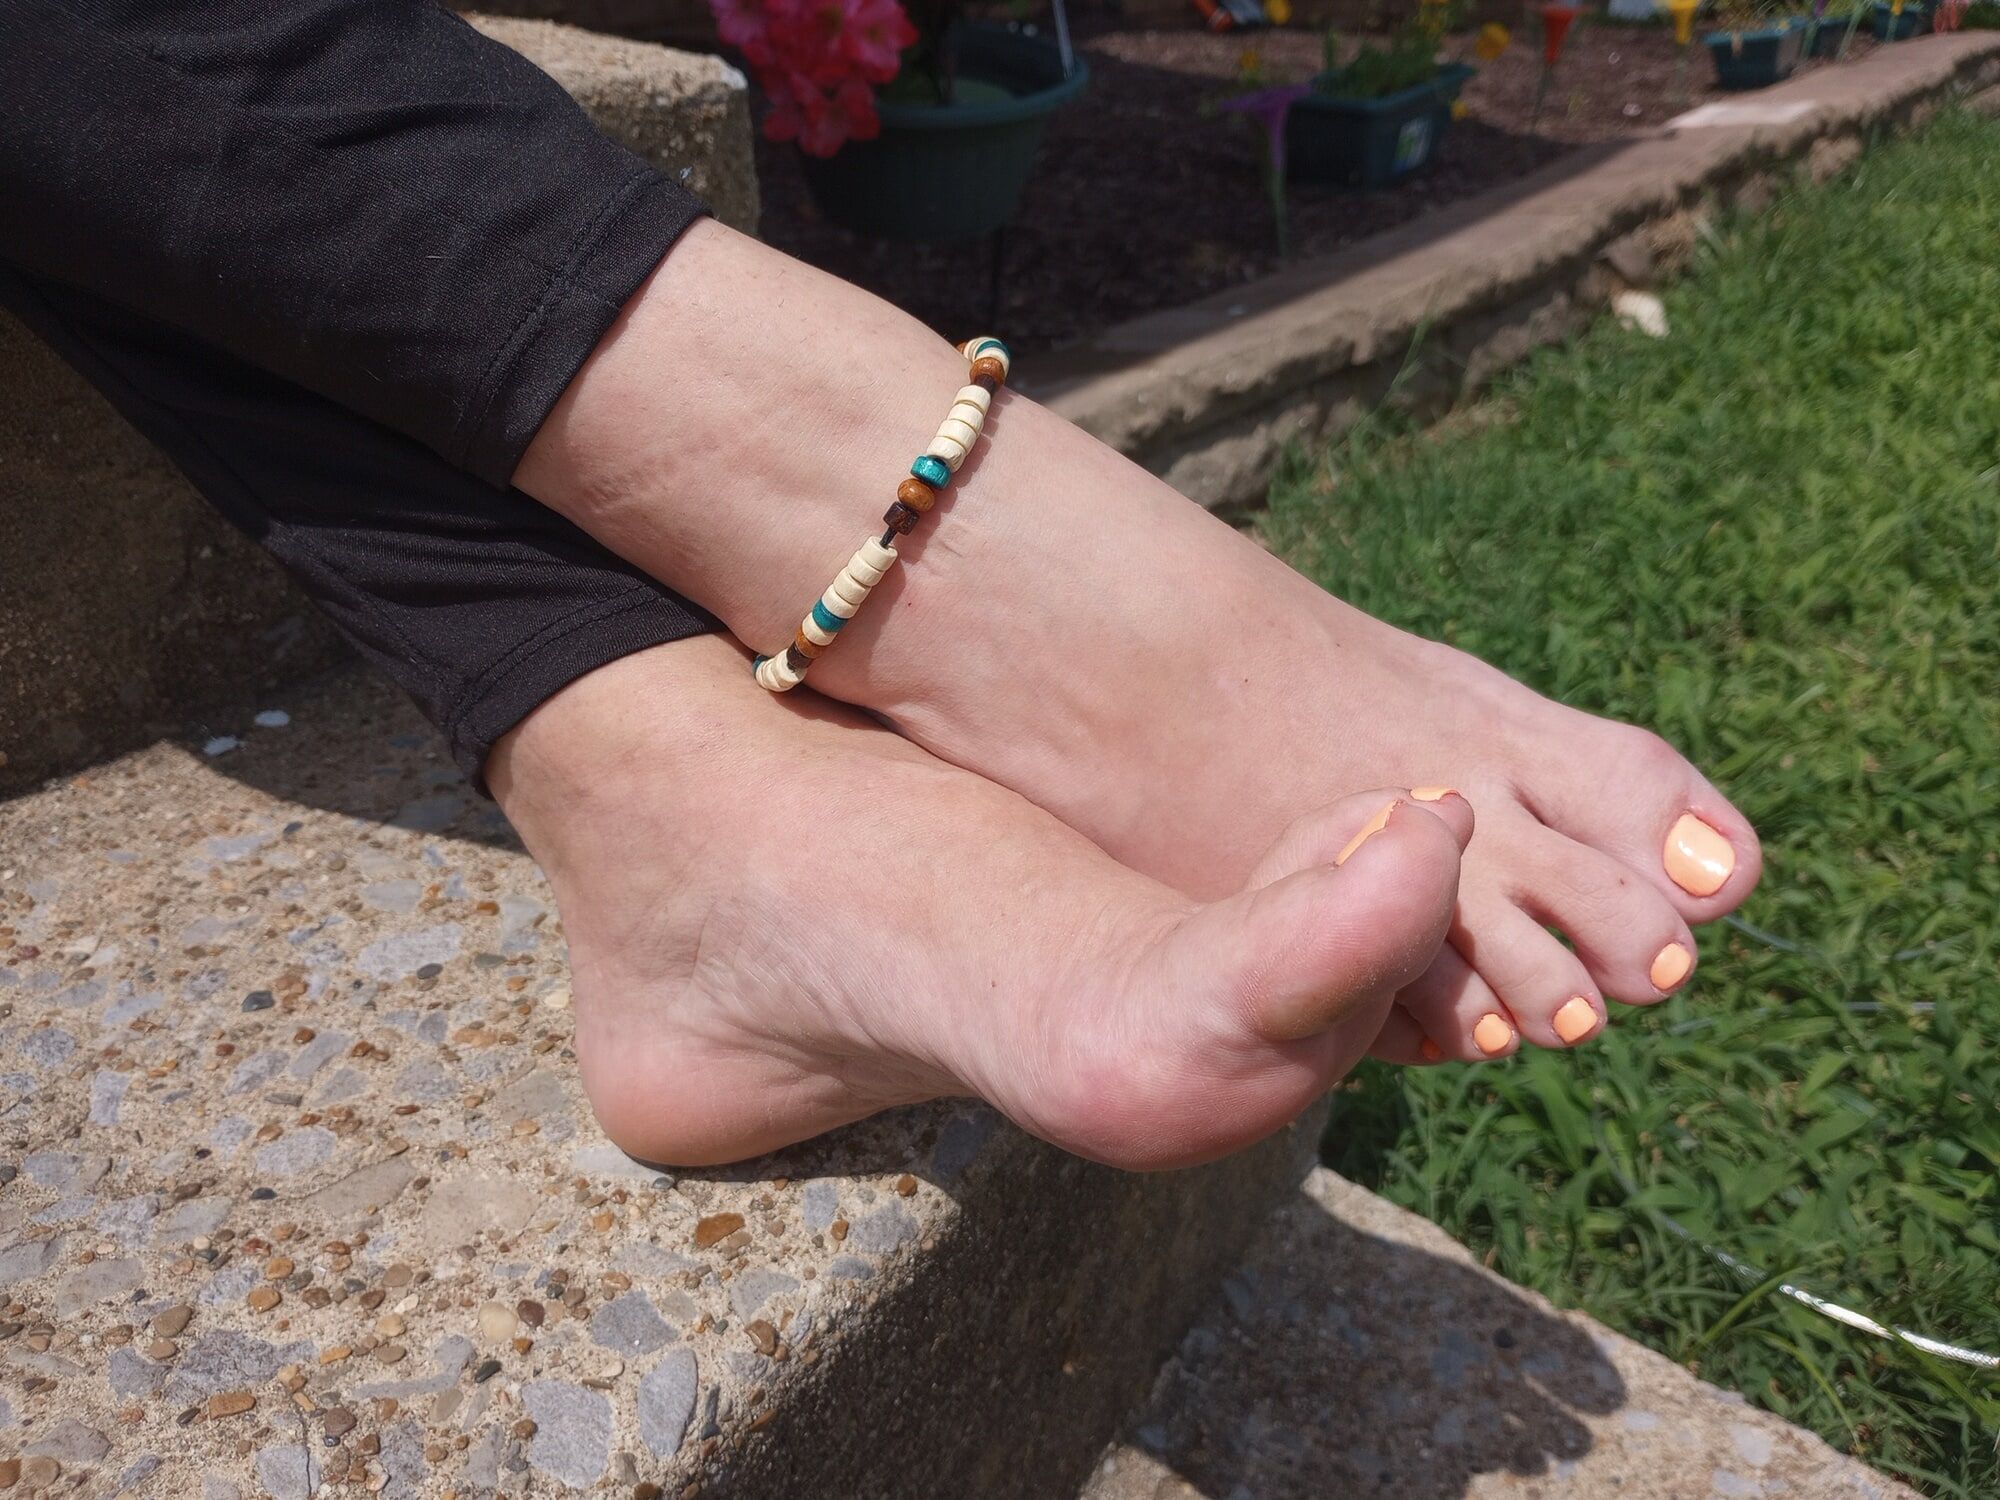 Showing Off Her Anklet 2 #3